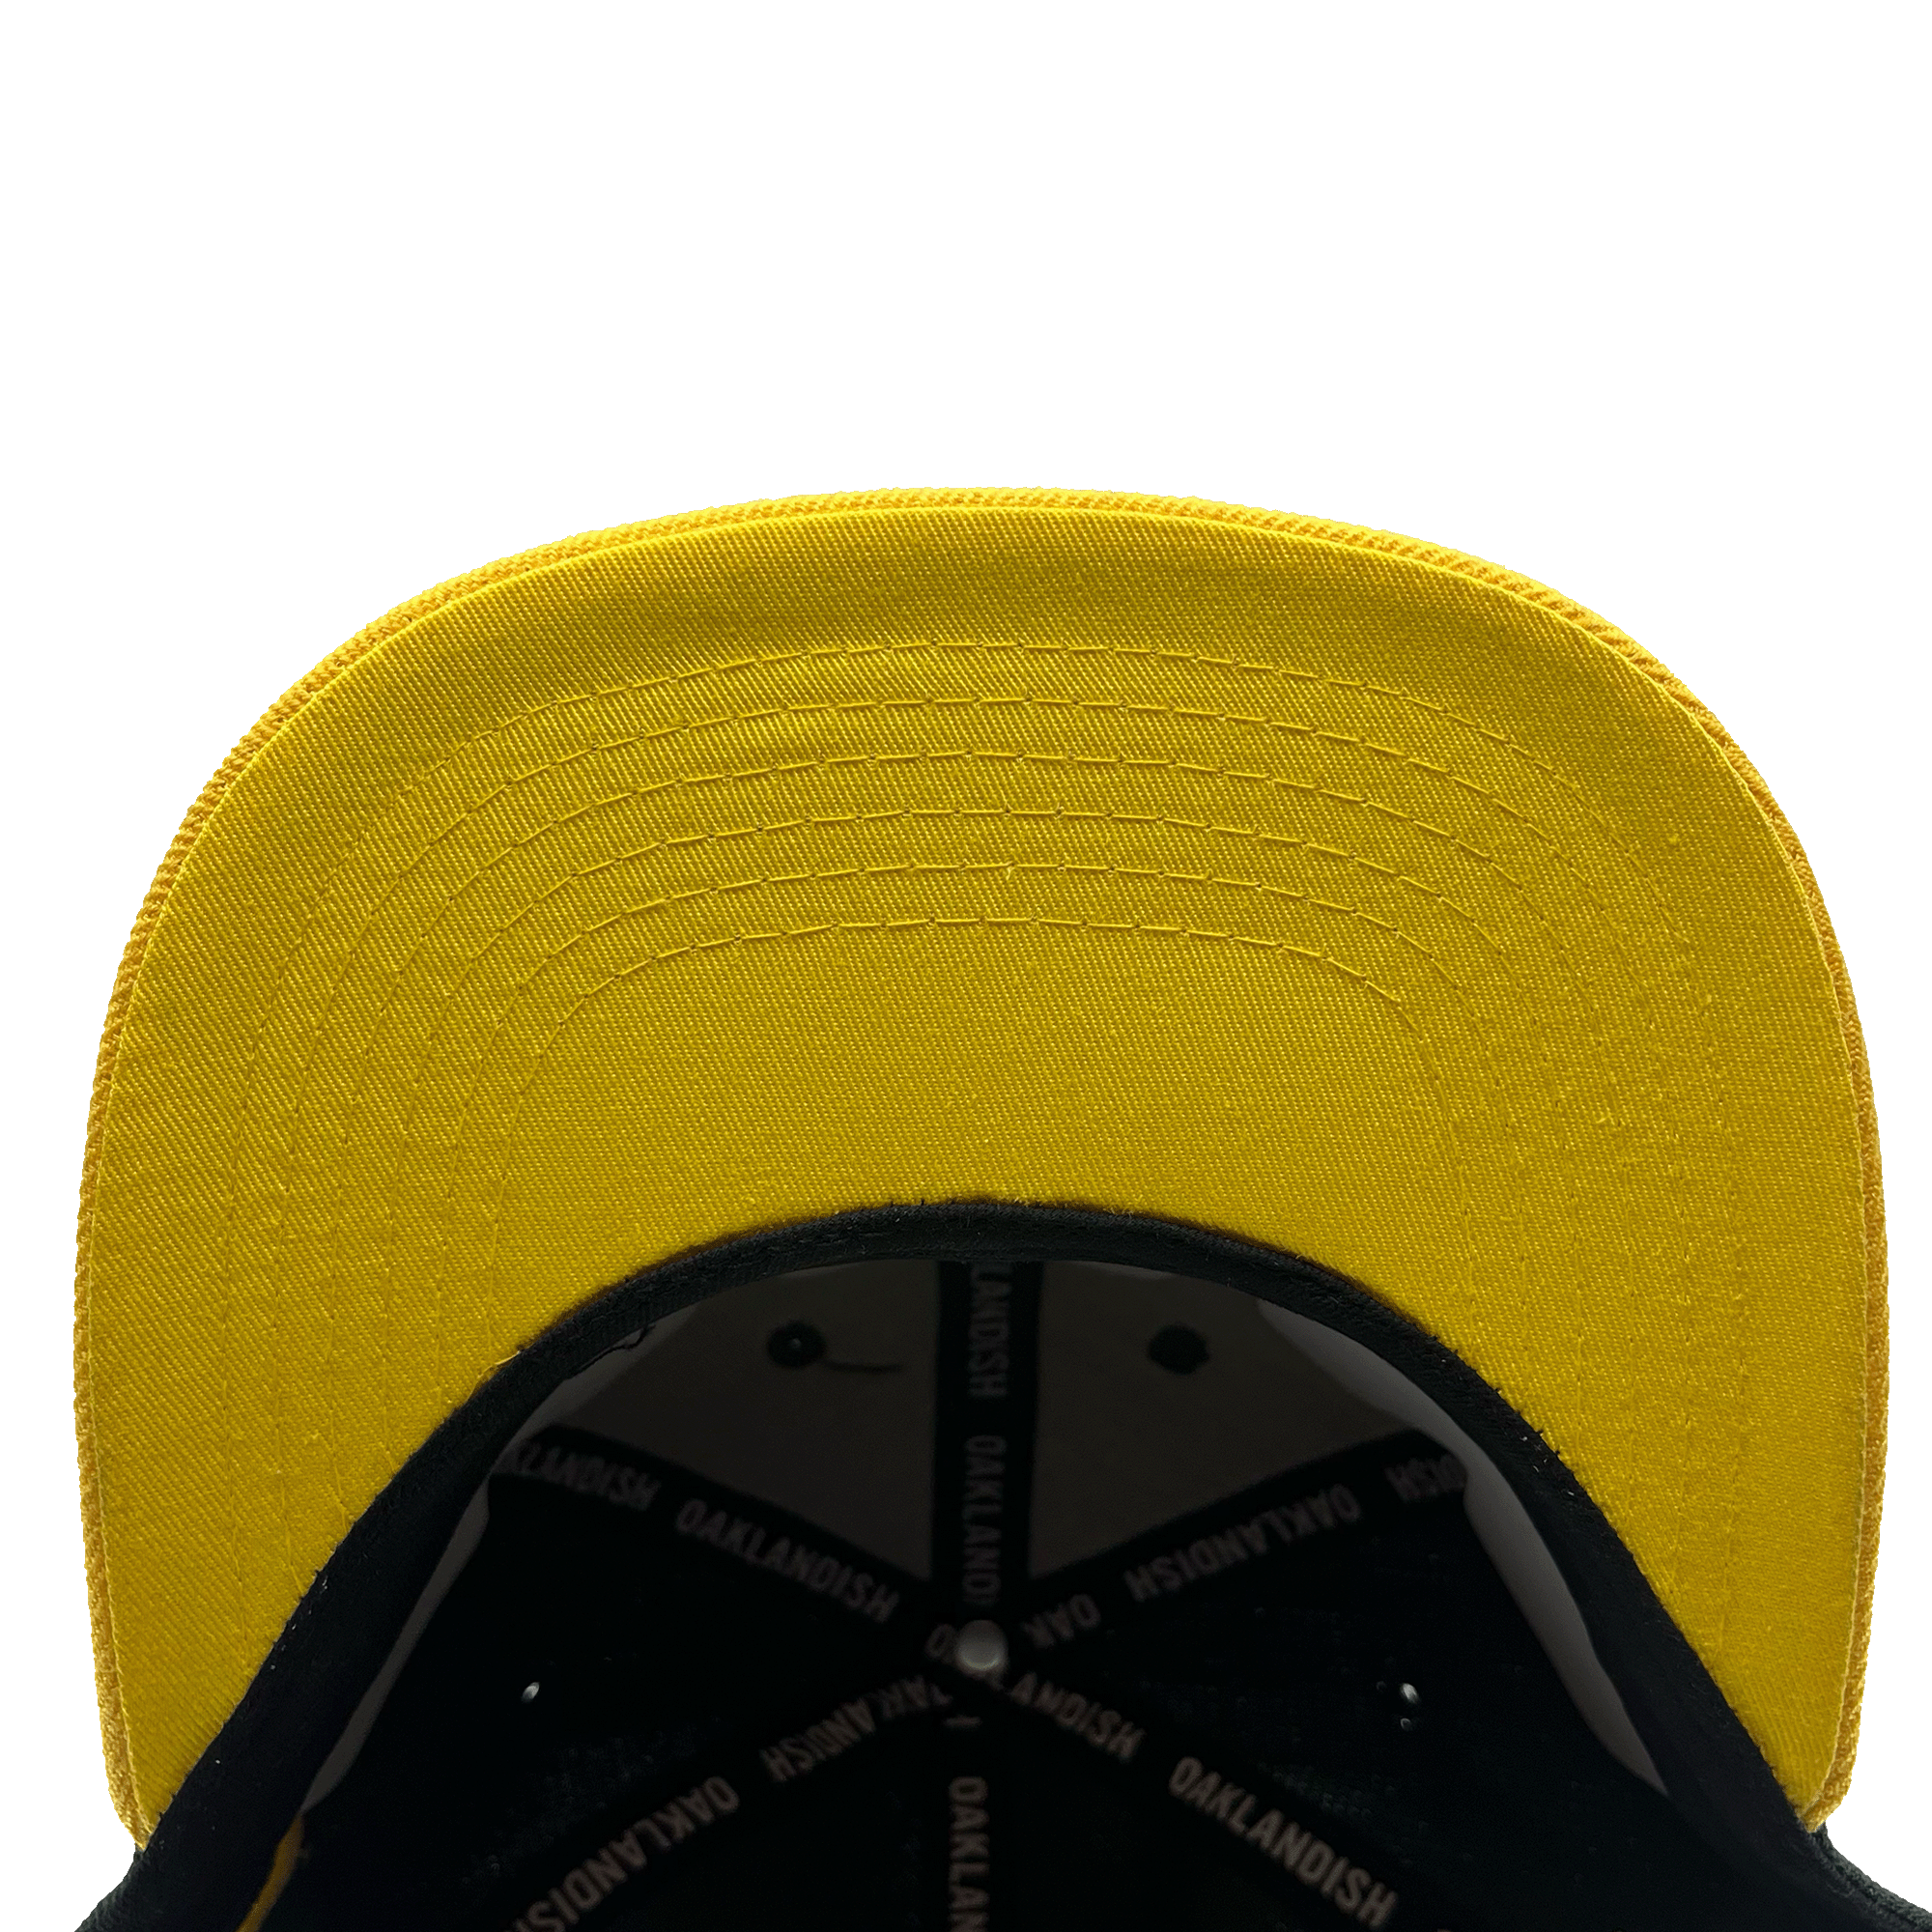 Underside view of flat yellow bill  with OAKLANDISH wordmark taping inside.